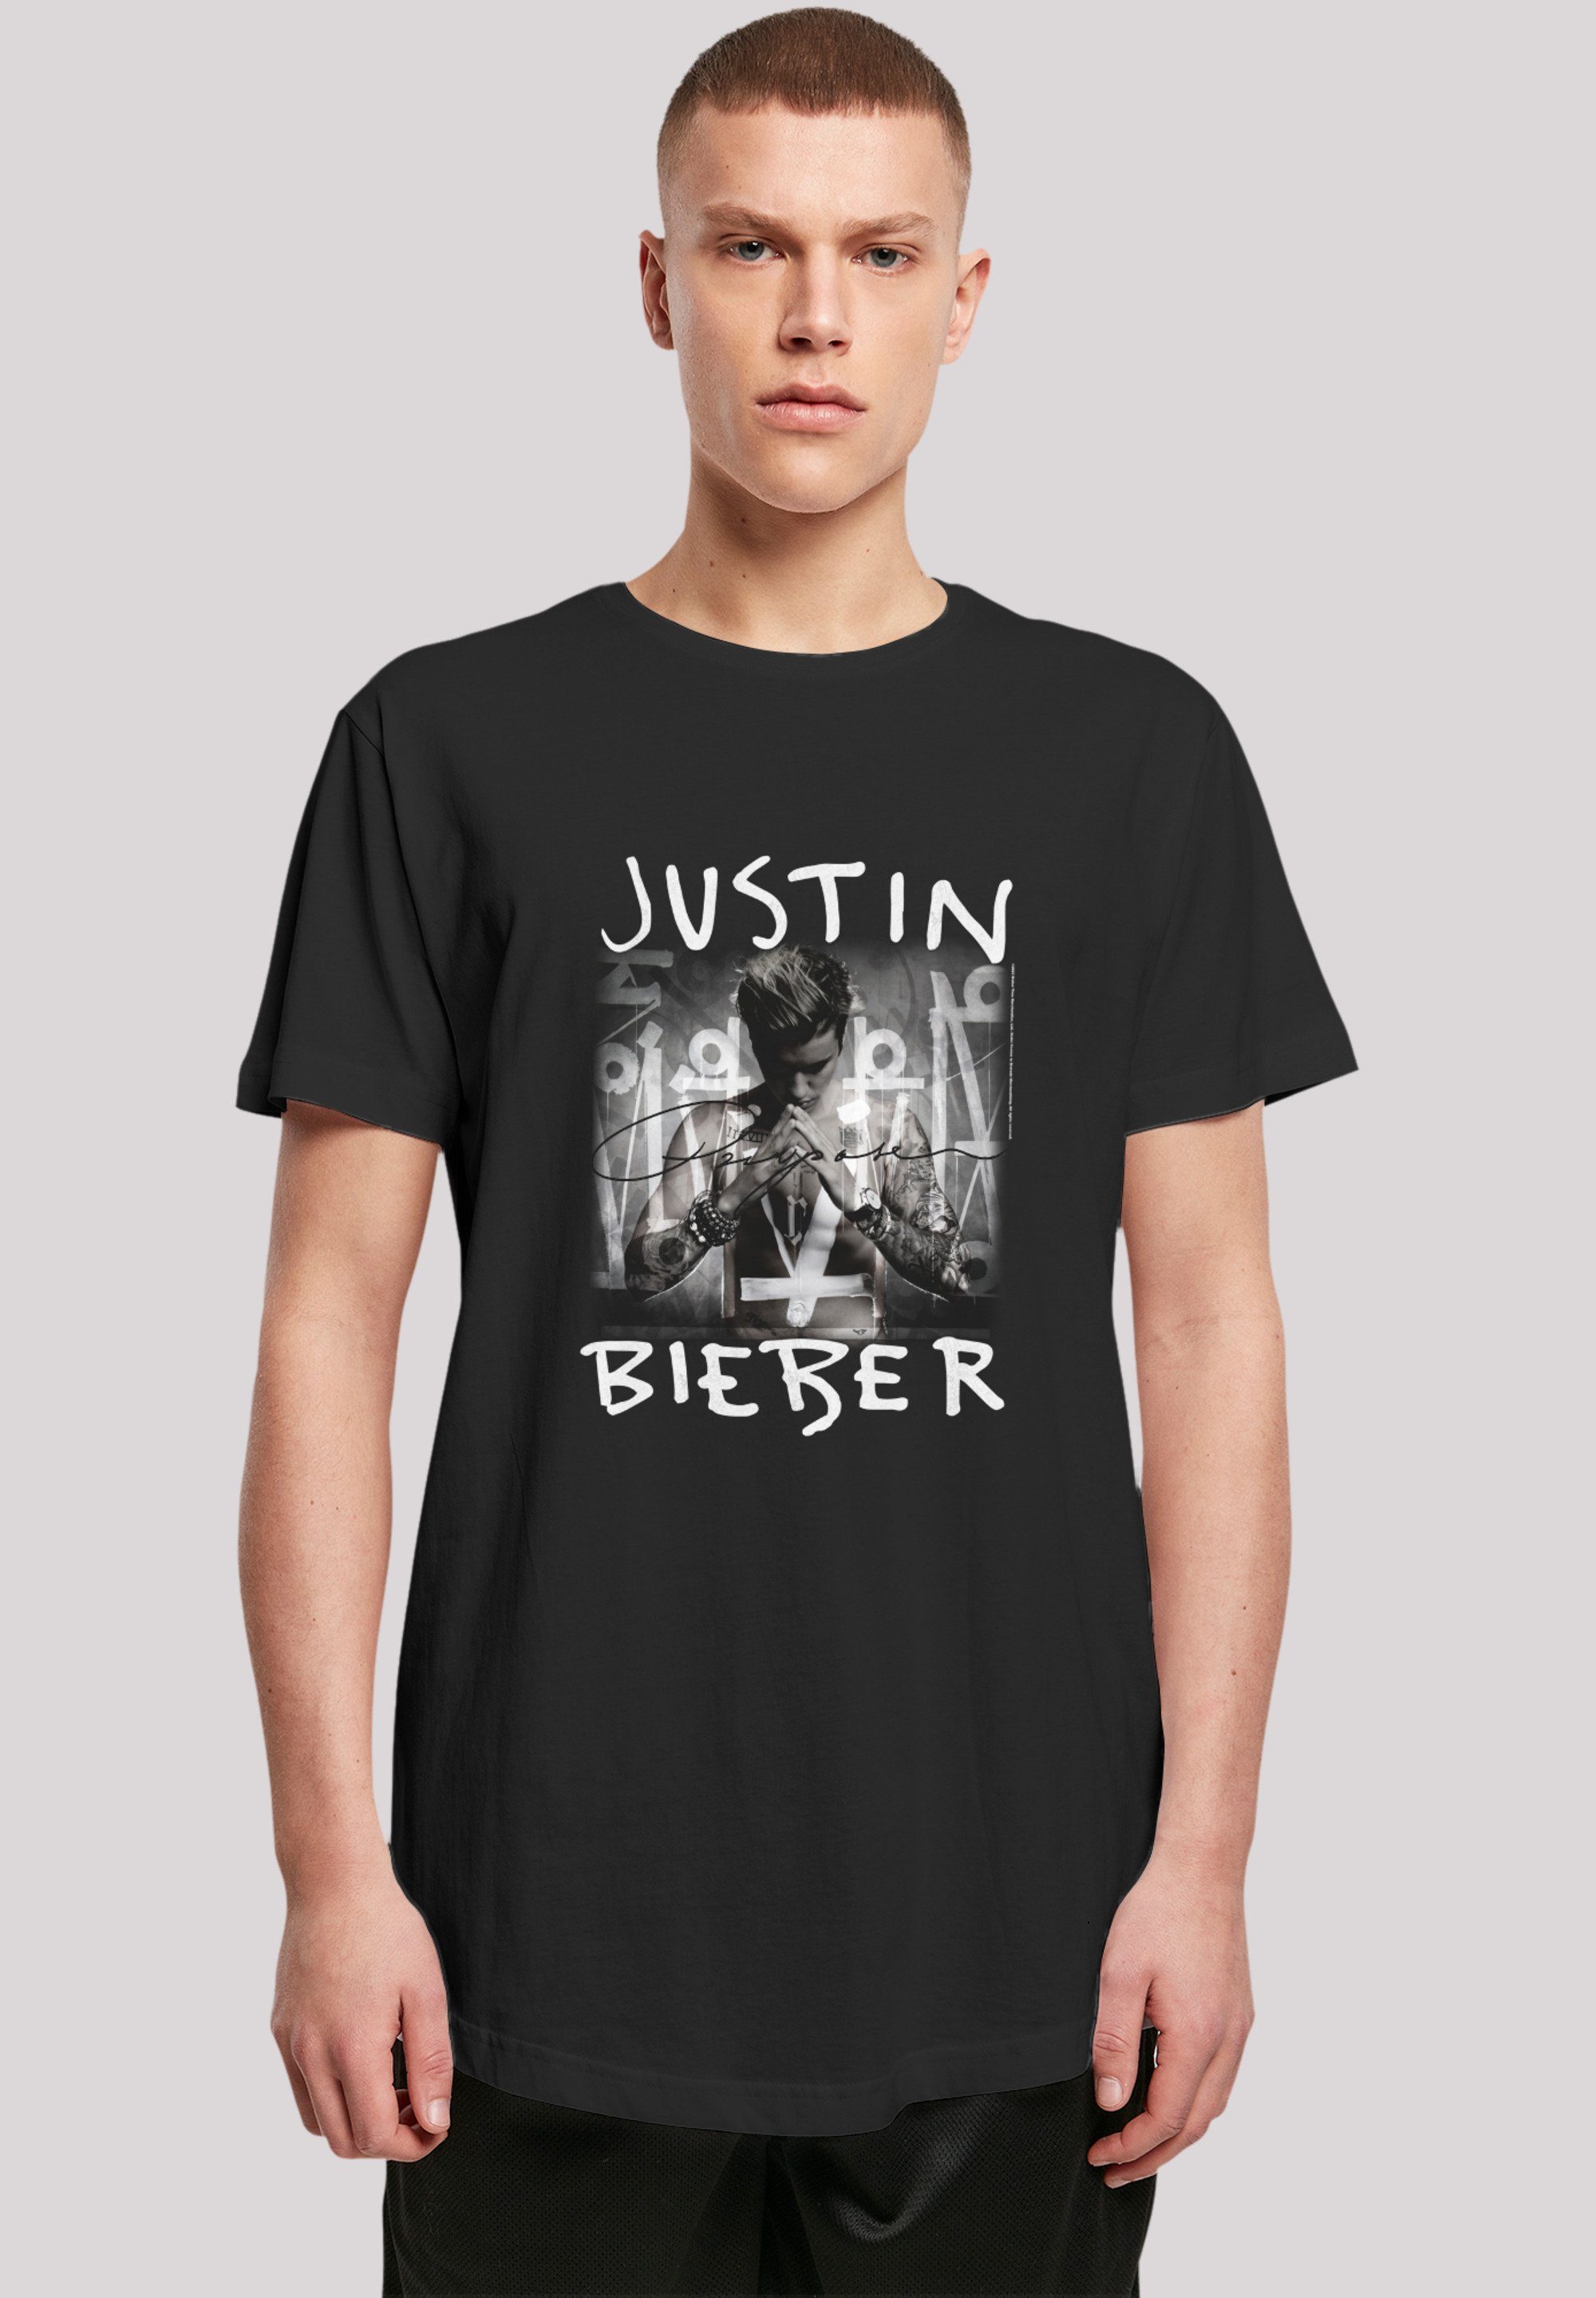 Premium Album Justin F4NT4STIC Qualität, T-Shirt Purpose Musik, Bieber By Off Cover Rock